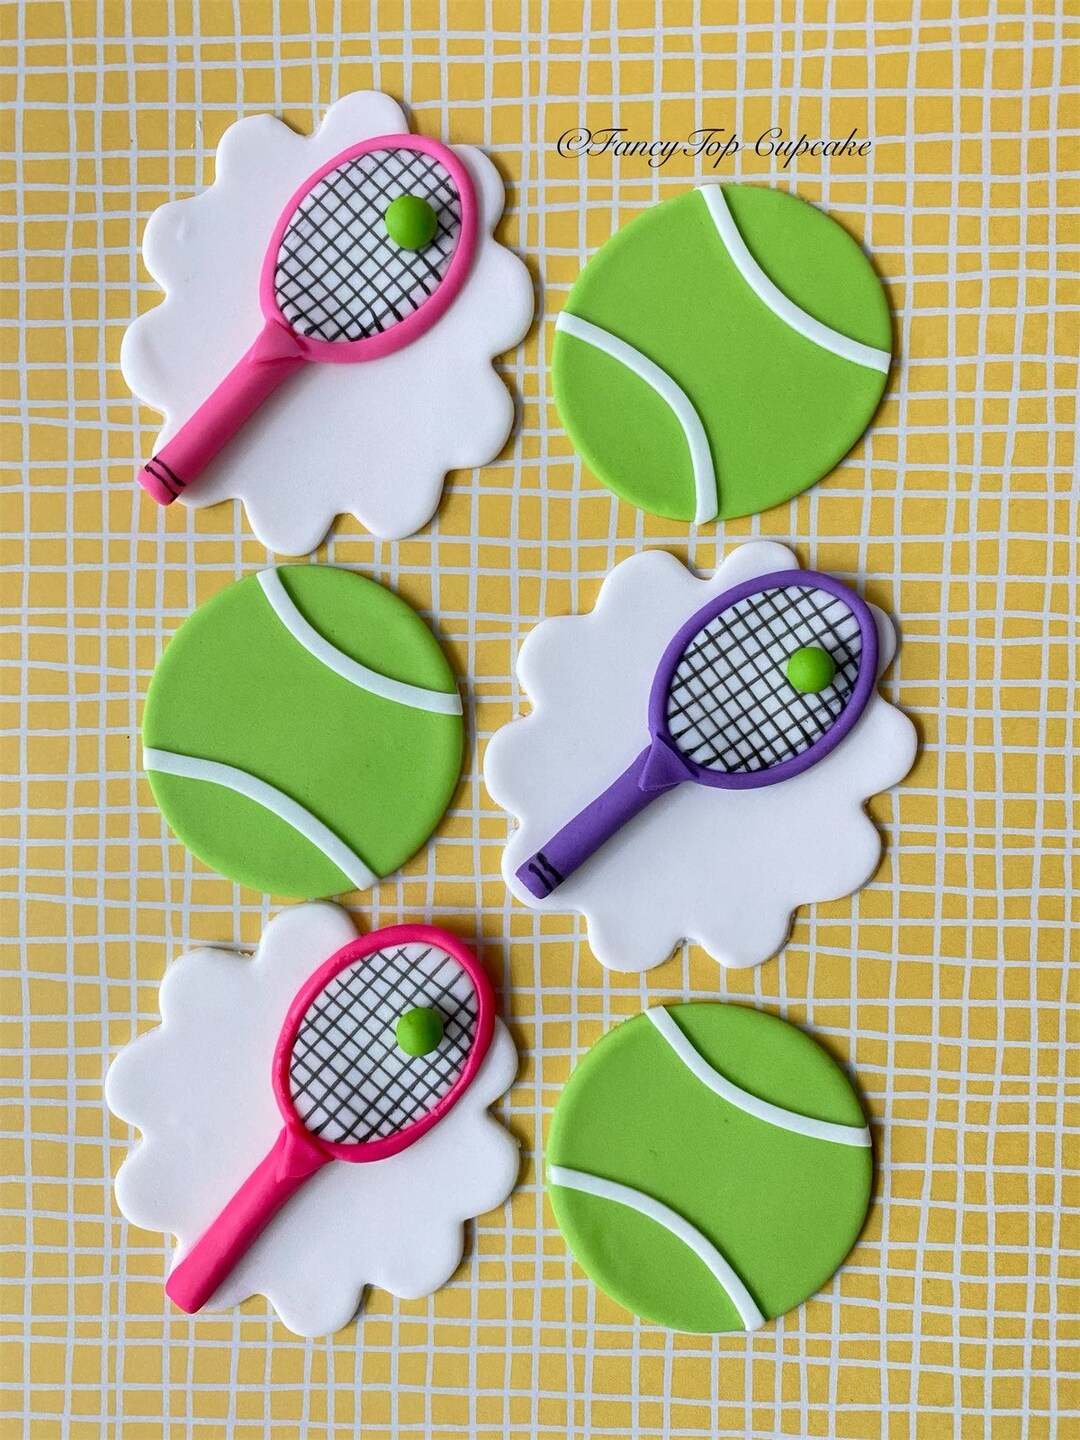 Fun Colored Rackets and Tennis Balls Handmade Edible Fondant